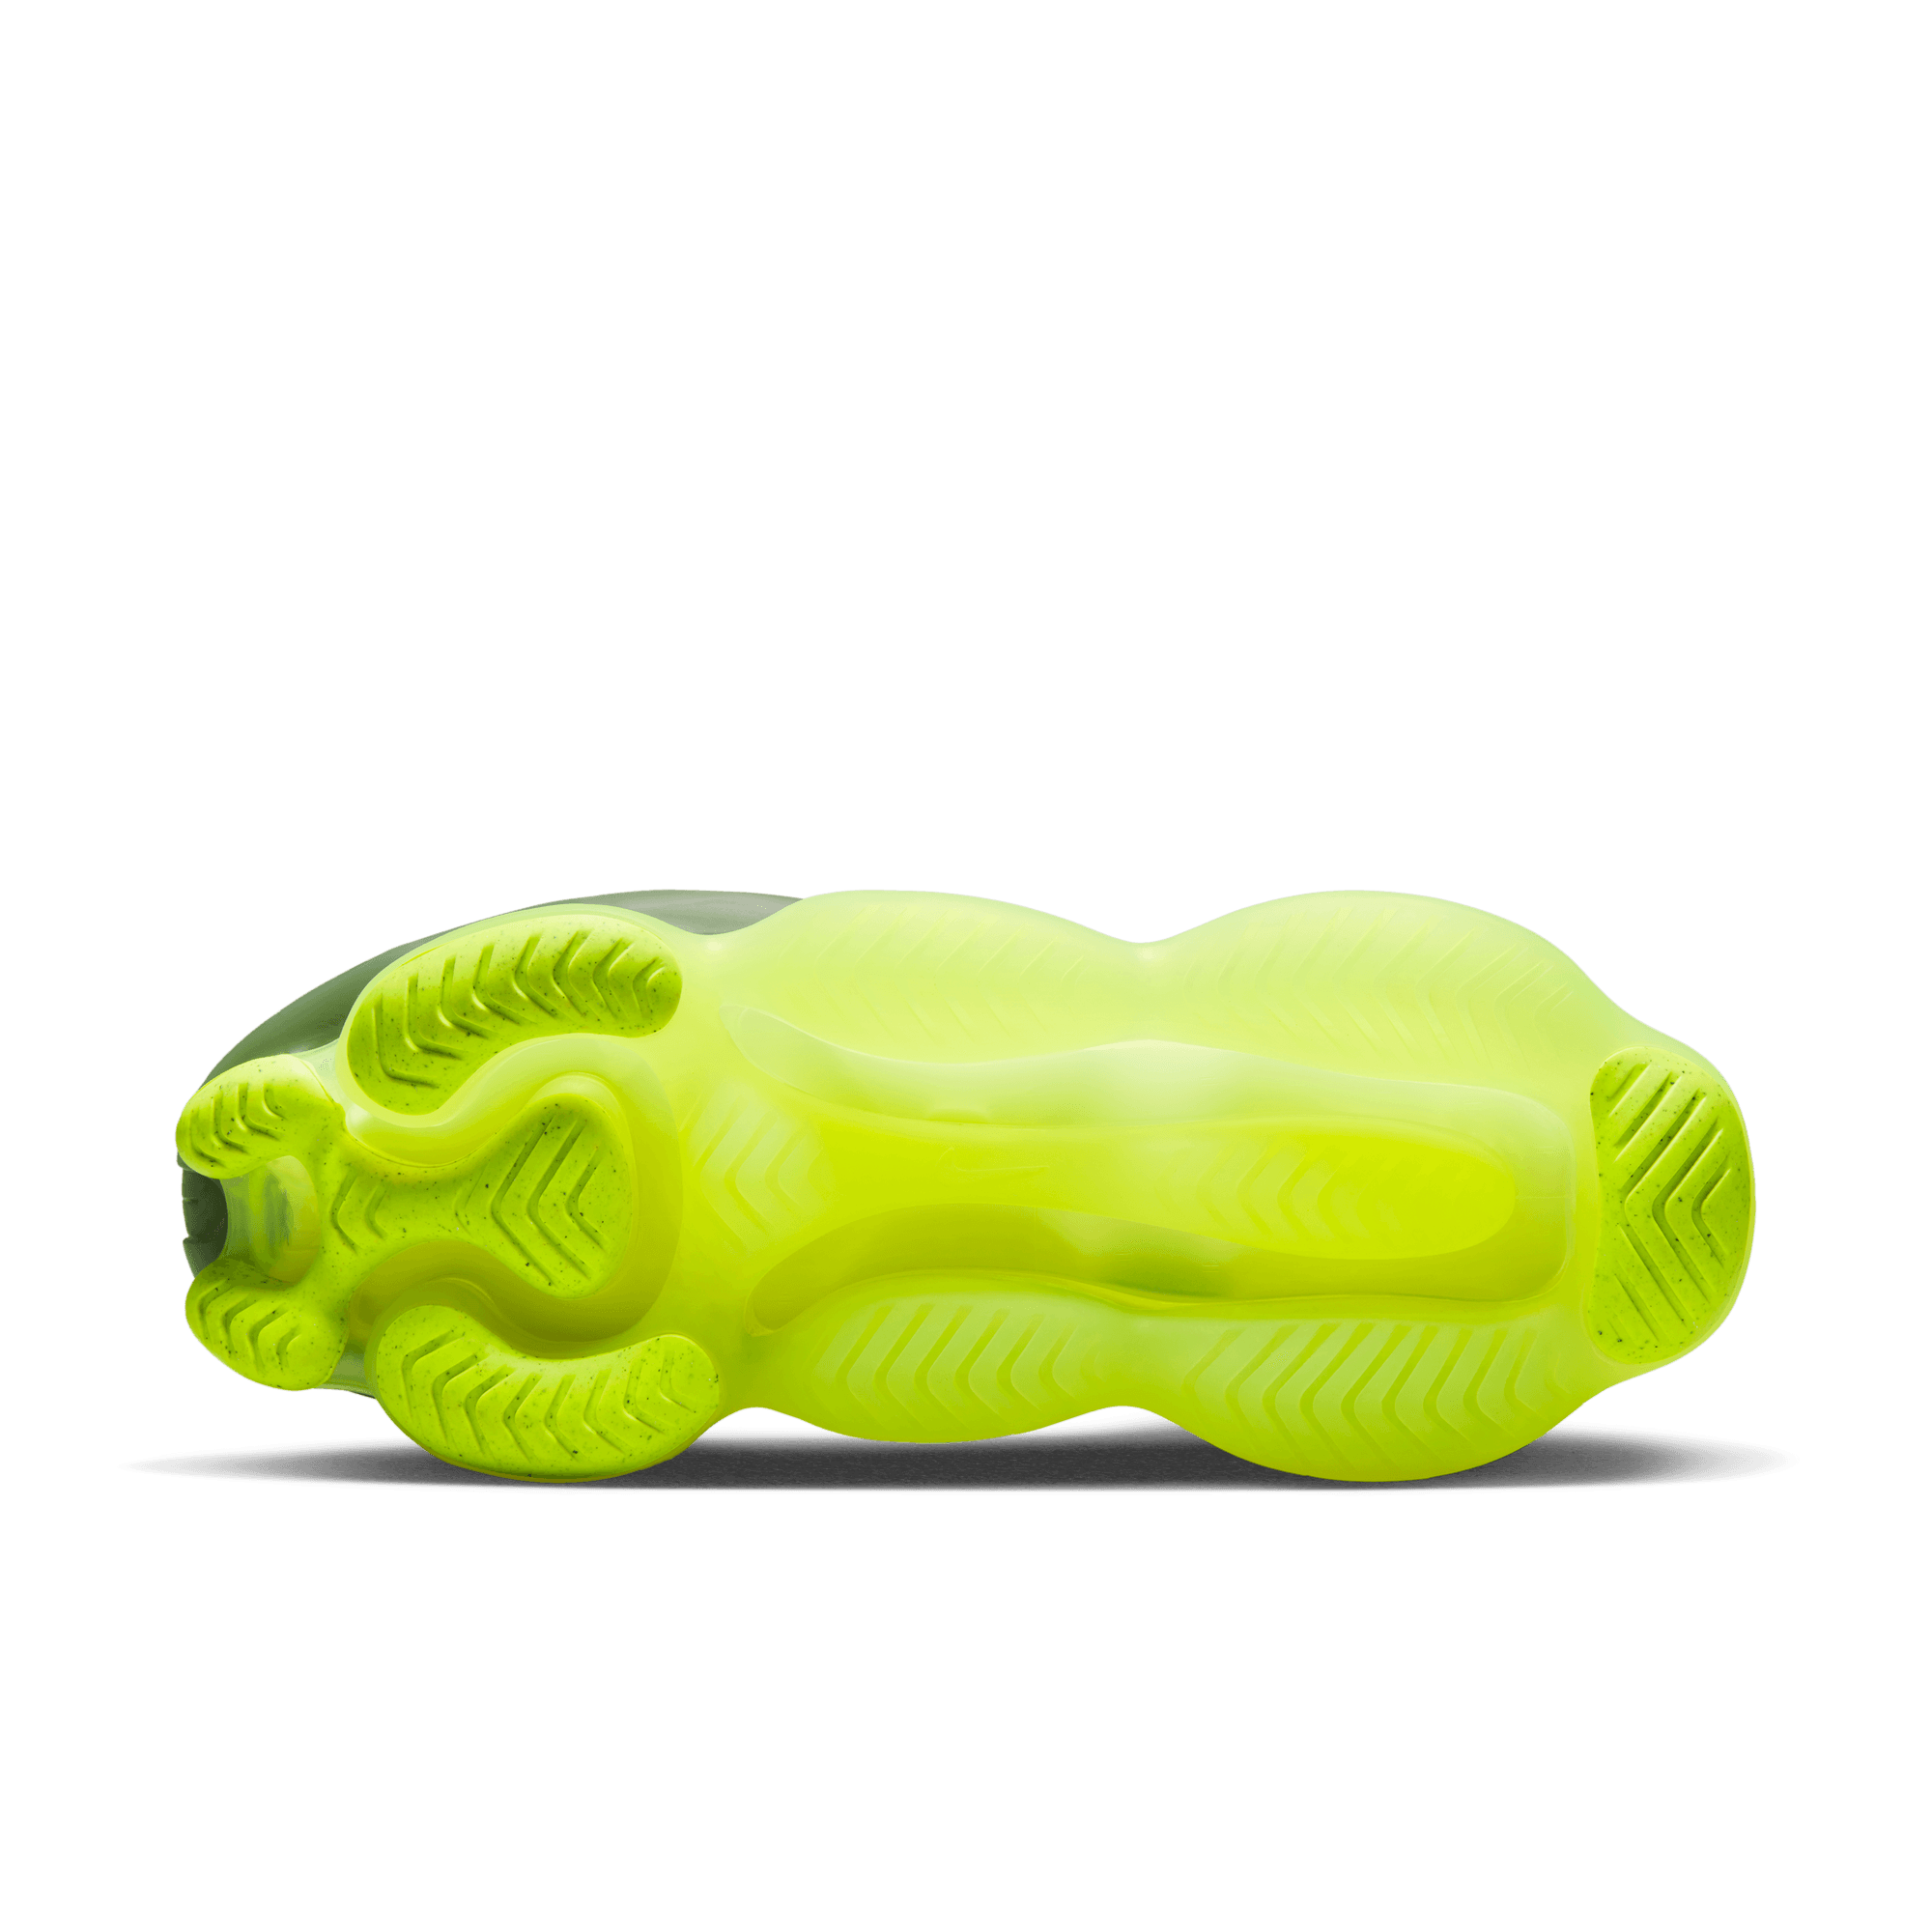 Nike Air Max Scorpion Flyknit 'Jade Horizon'